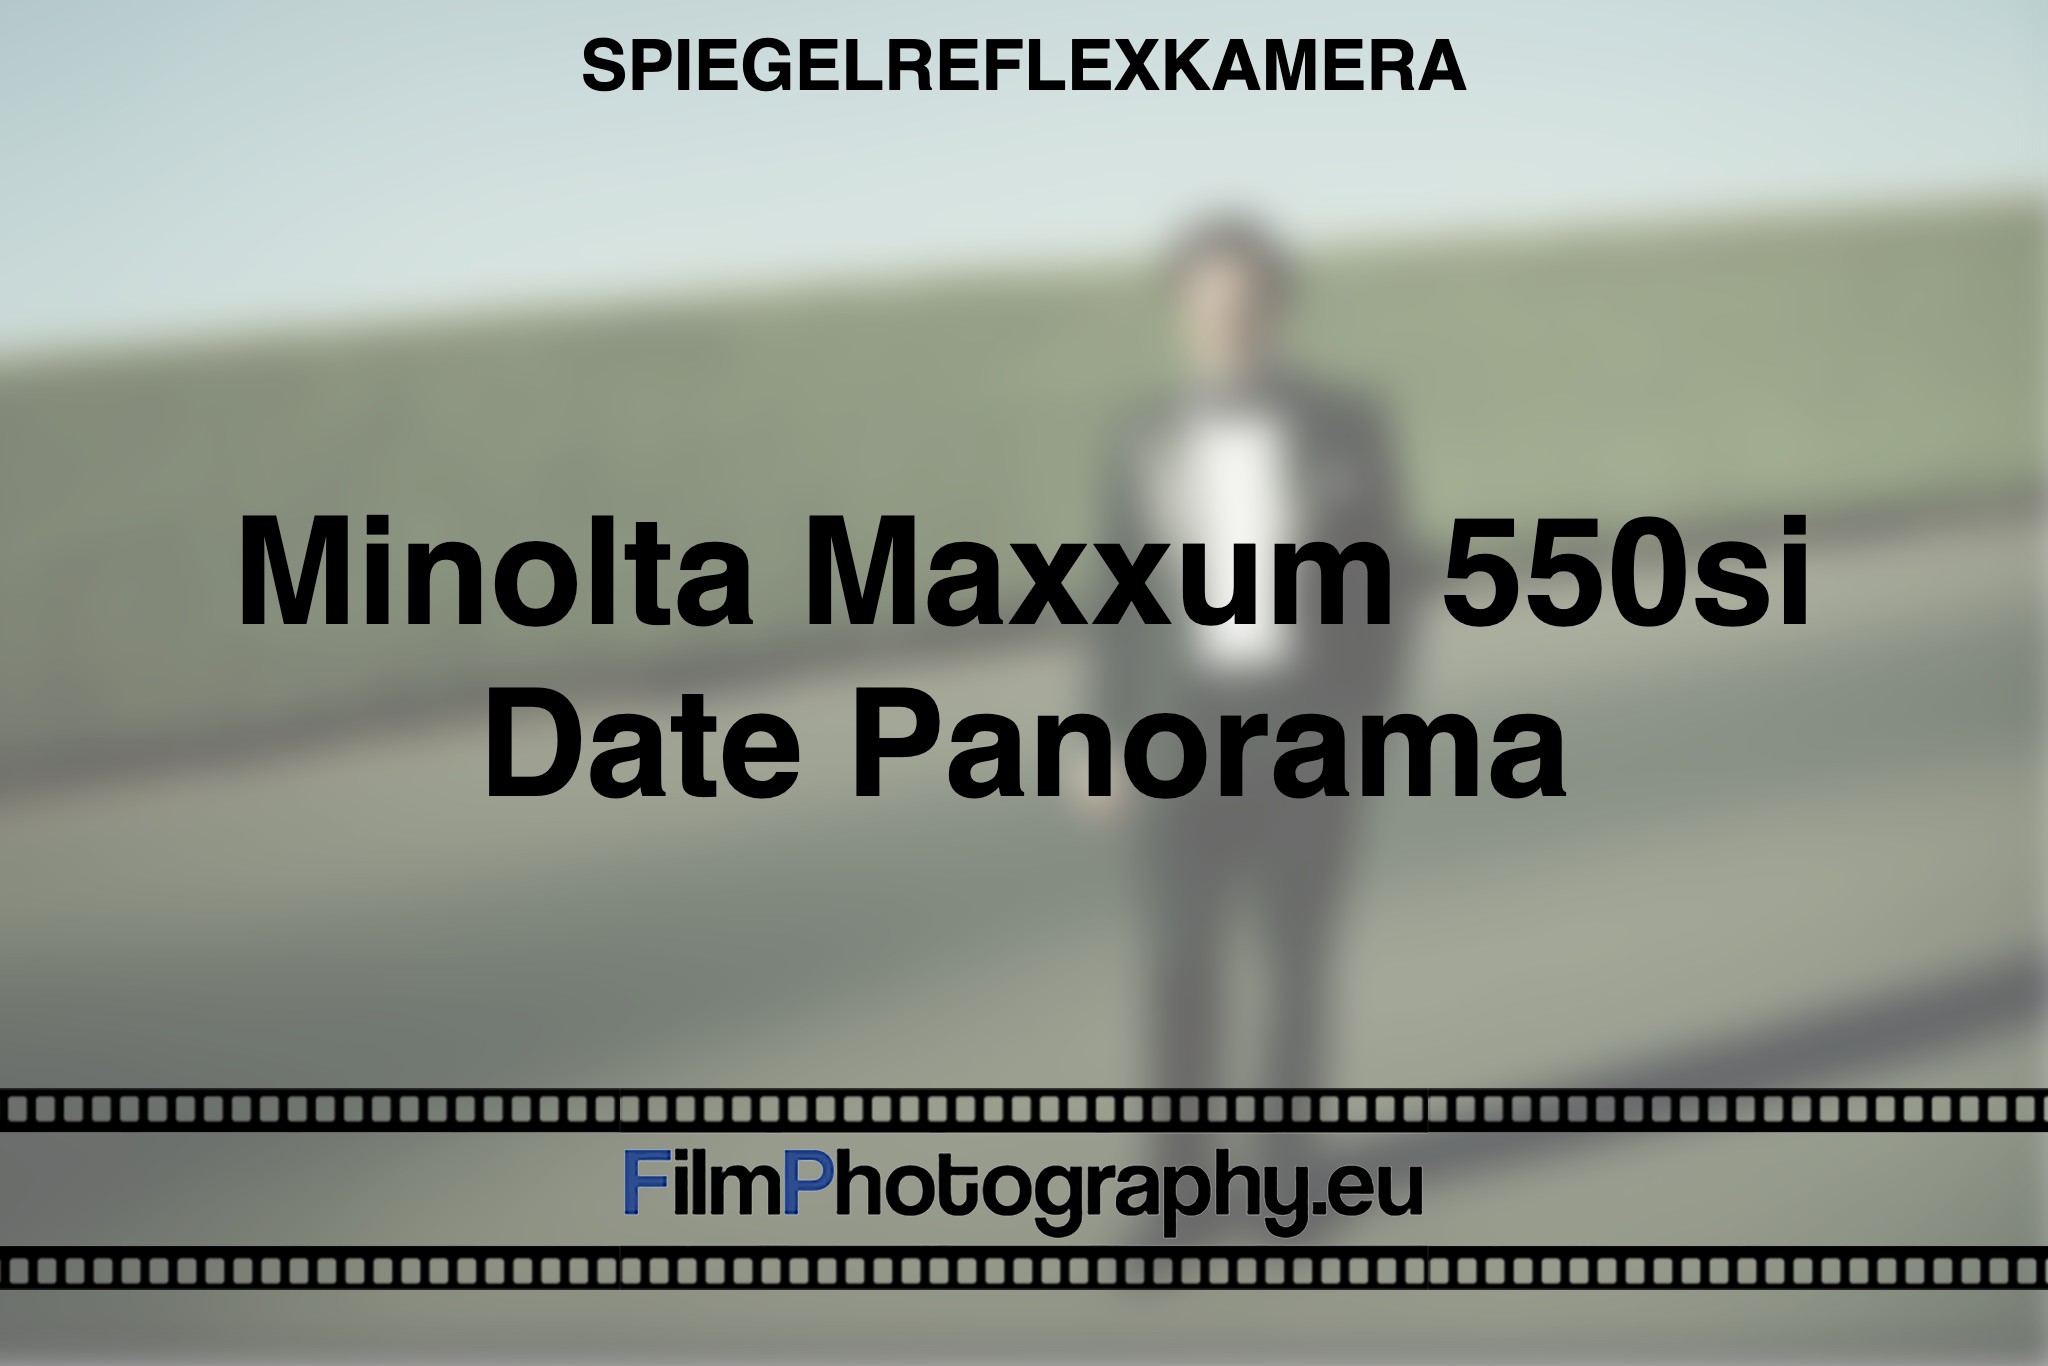 minolta-maxxum-550si-date-panorama-spiegelreflexkamera-bnv